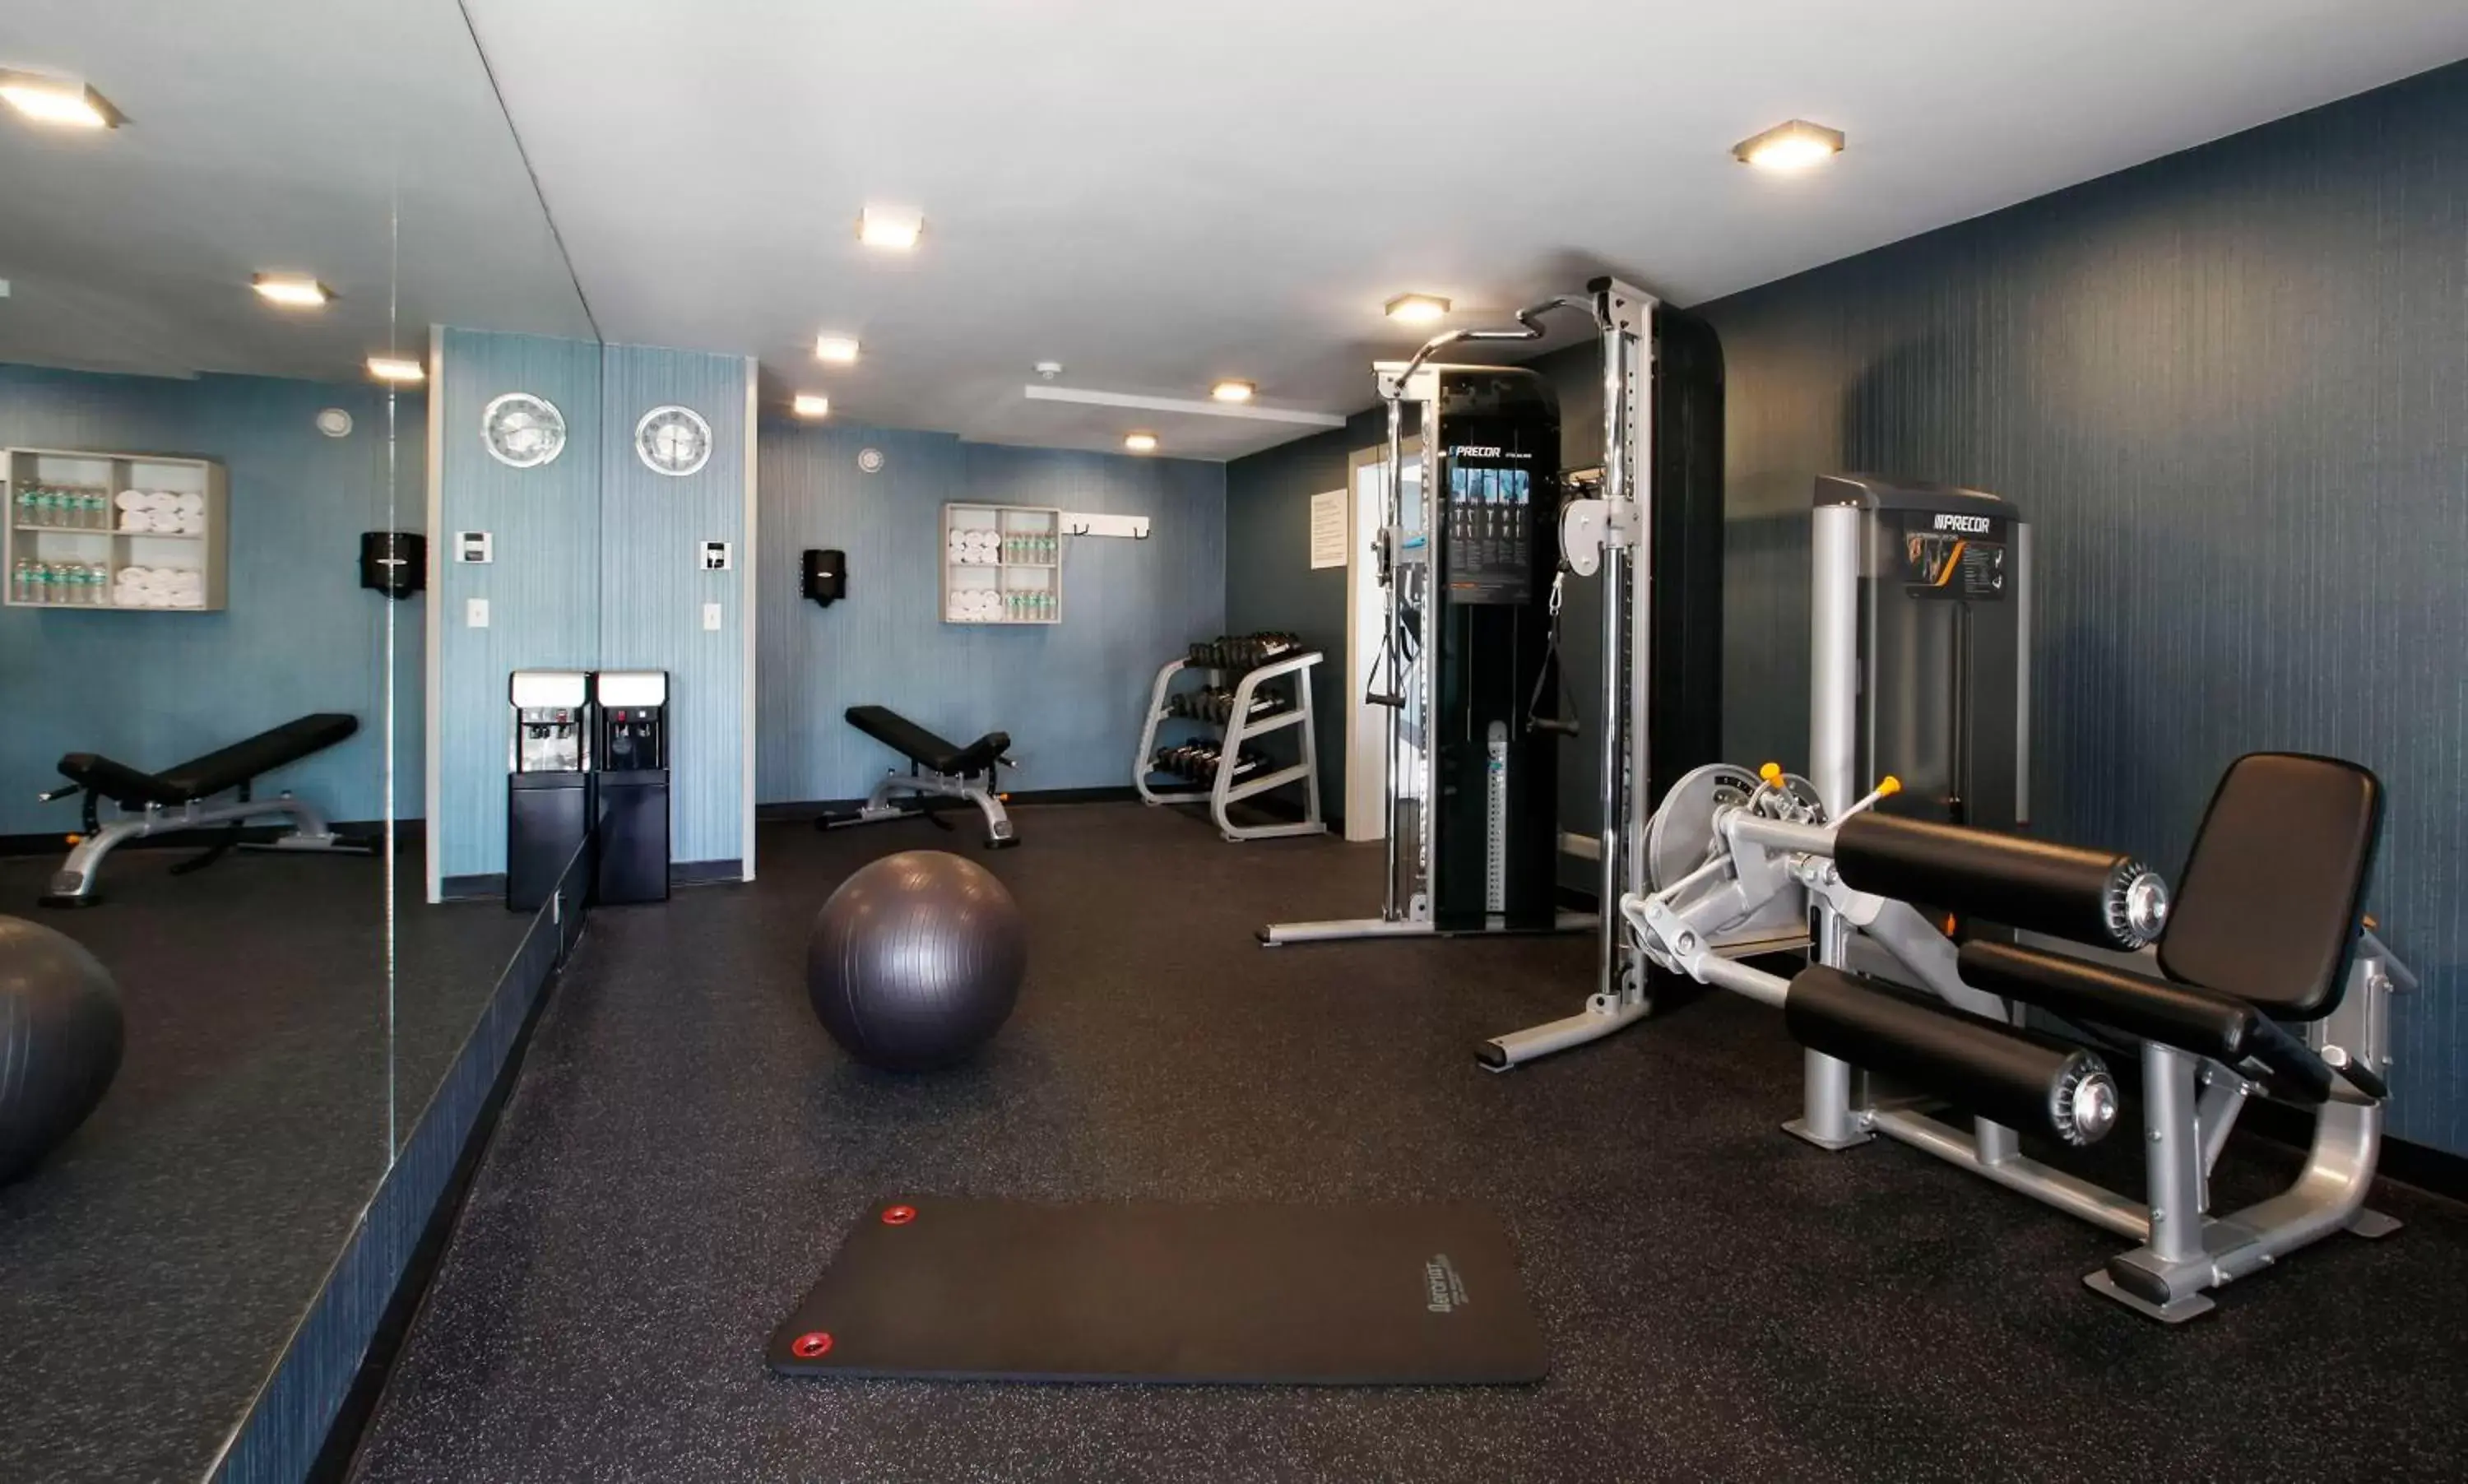 Fitness centre/facilities in Radisson Hotel Oakland Airport